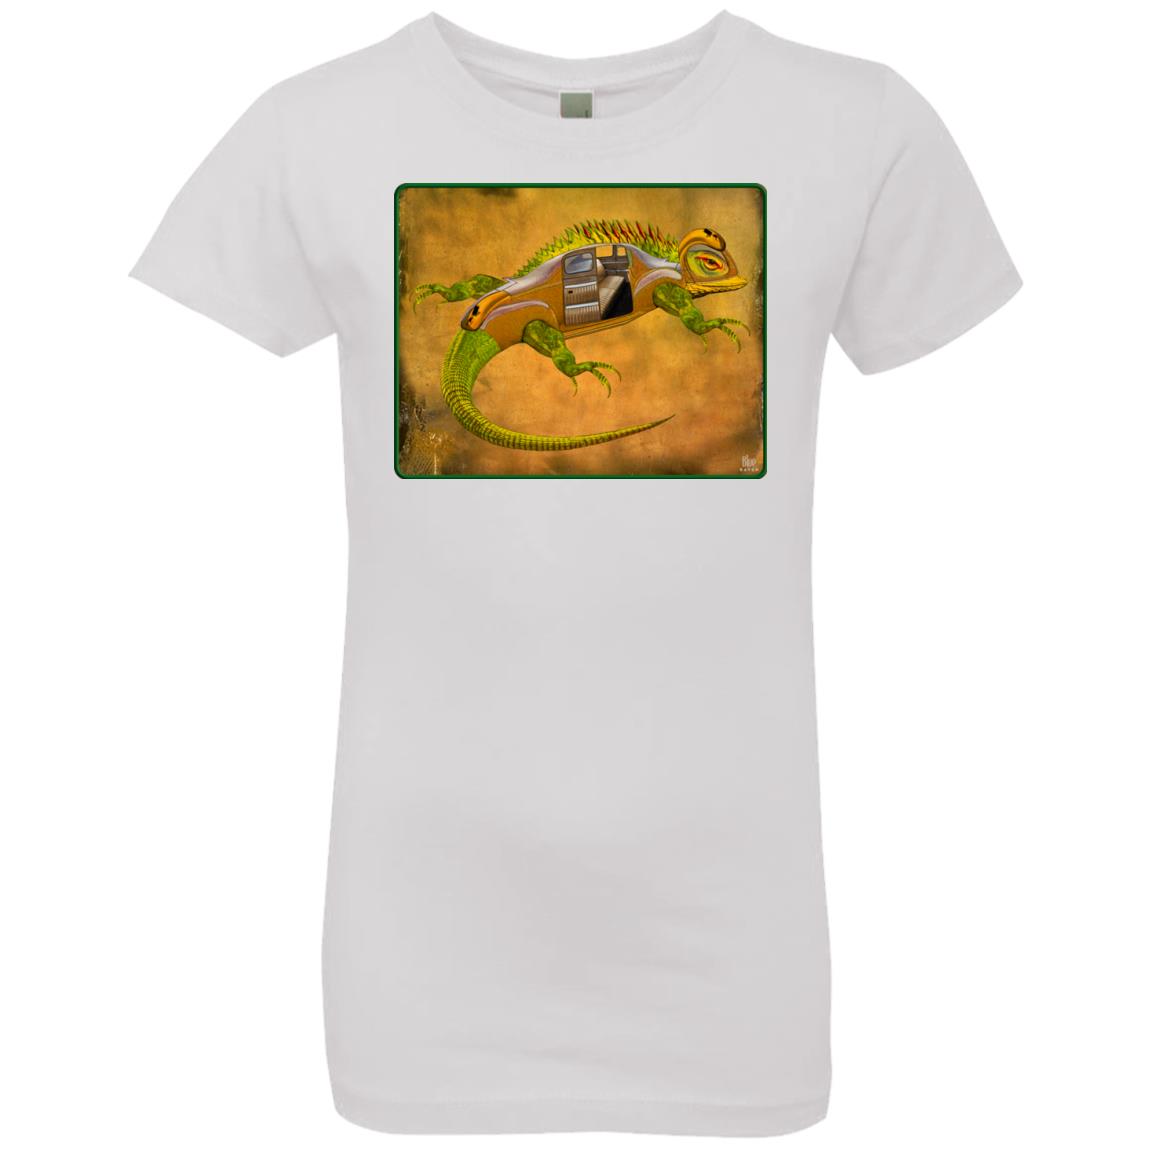 Uber Lizard - green - Girl's Premium Cotton T-Shirt